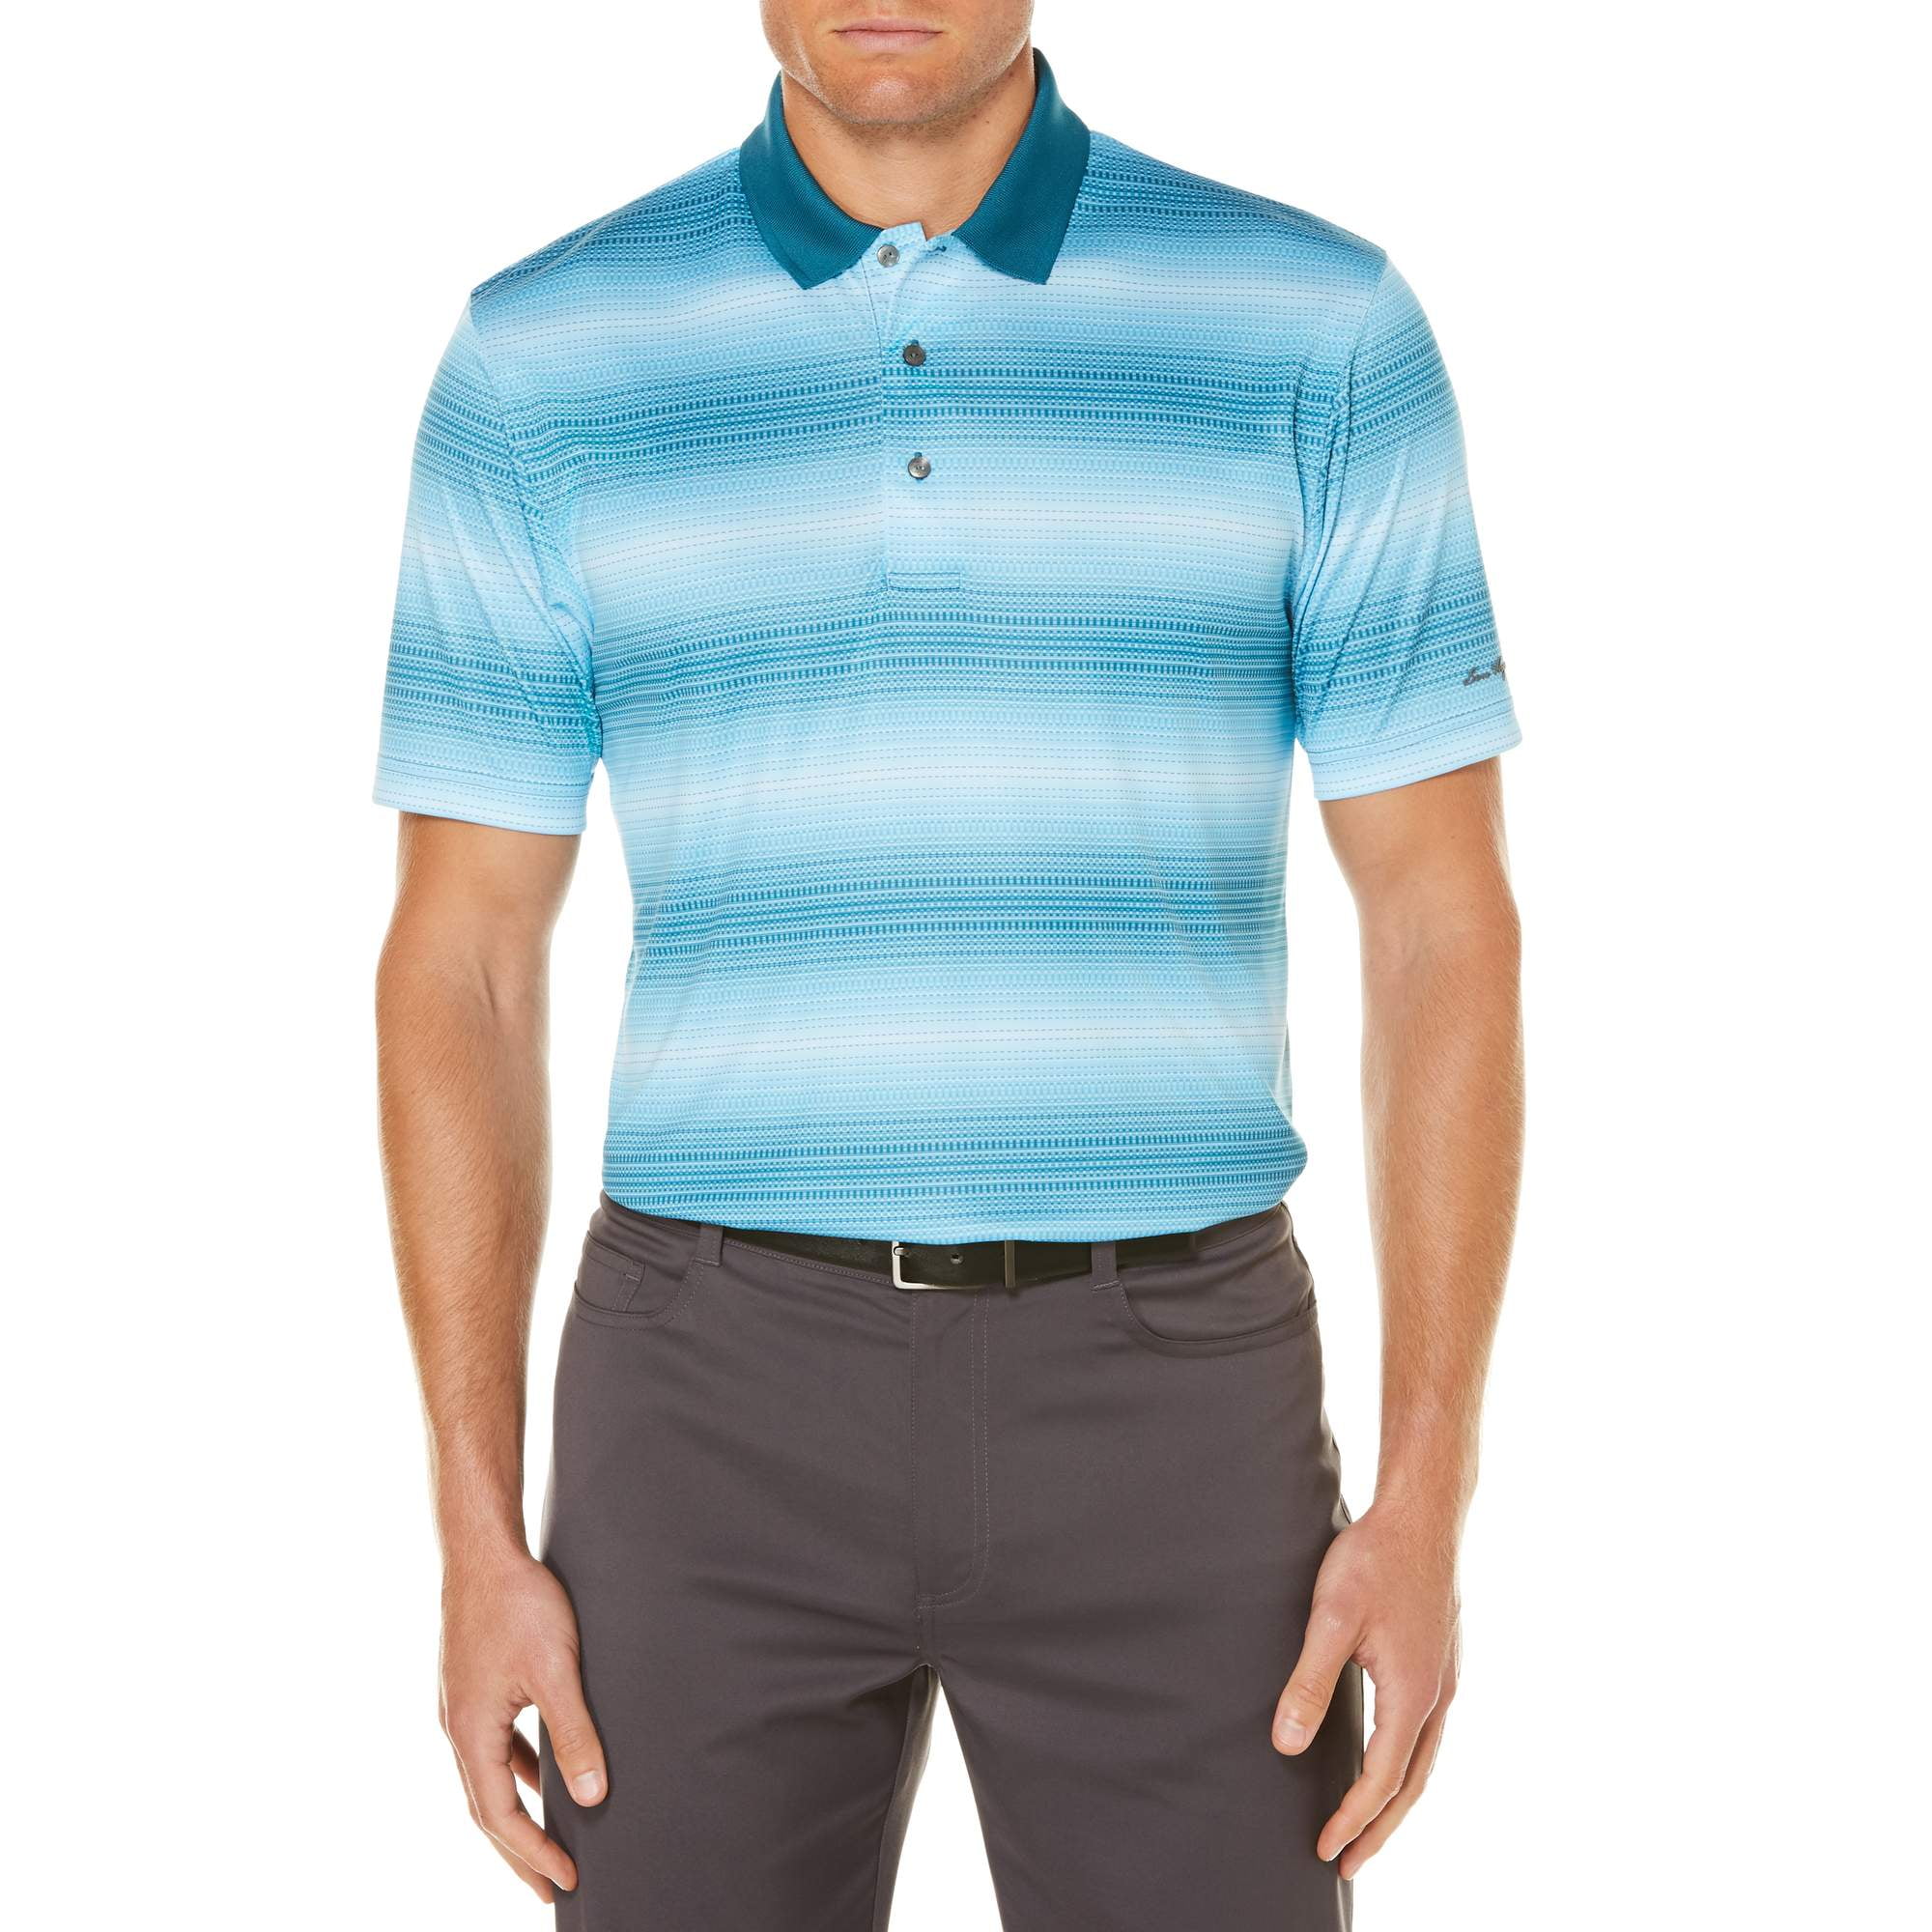 Ben Hogan Men's Performance Short Sleeve Printed Stripe Golf Polo Shirt ...